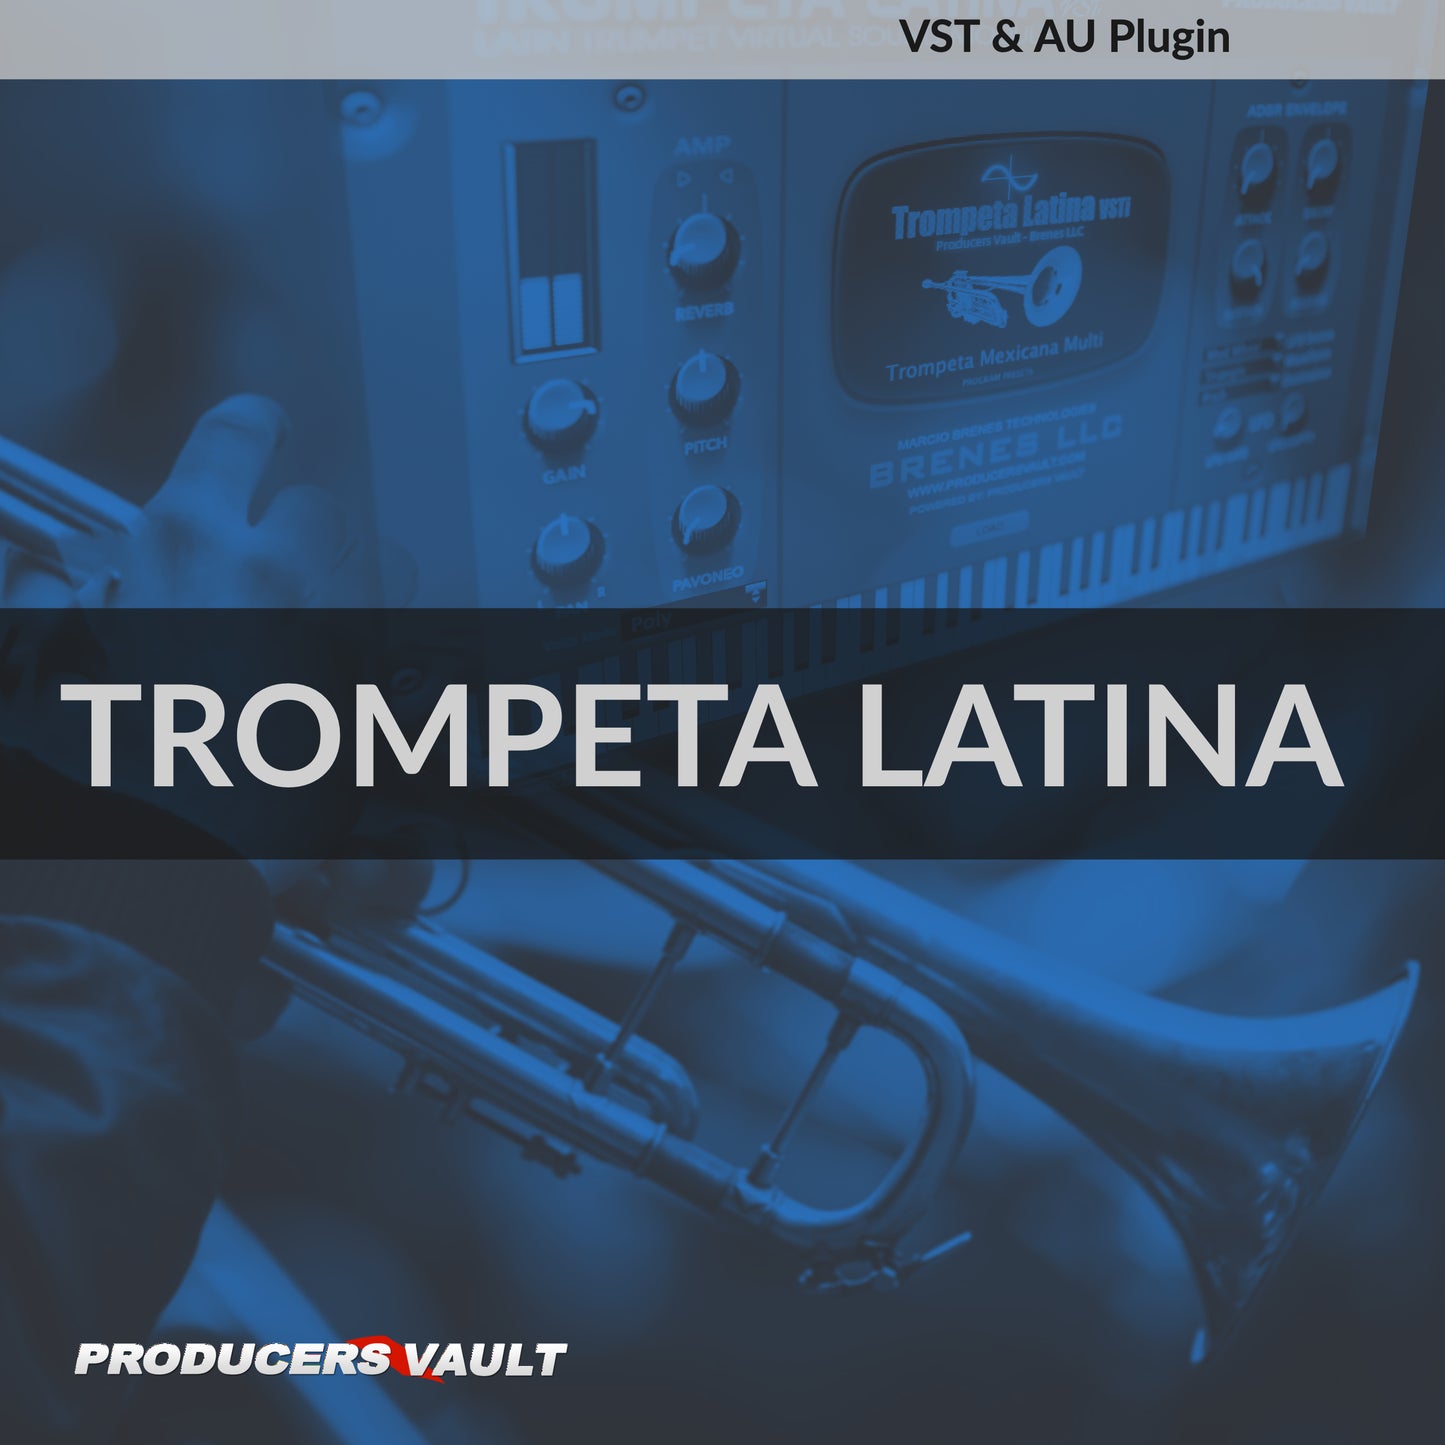 Trompeta Latina VSTi (Windows PC VST plugin)